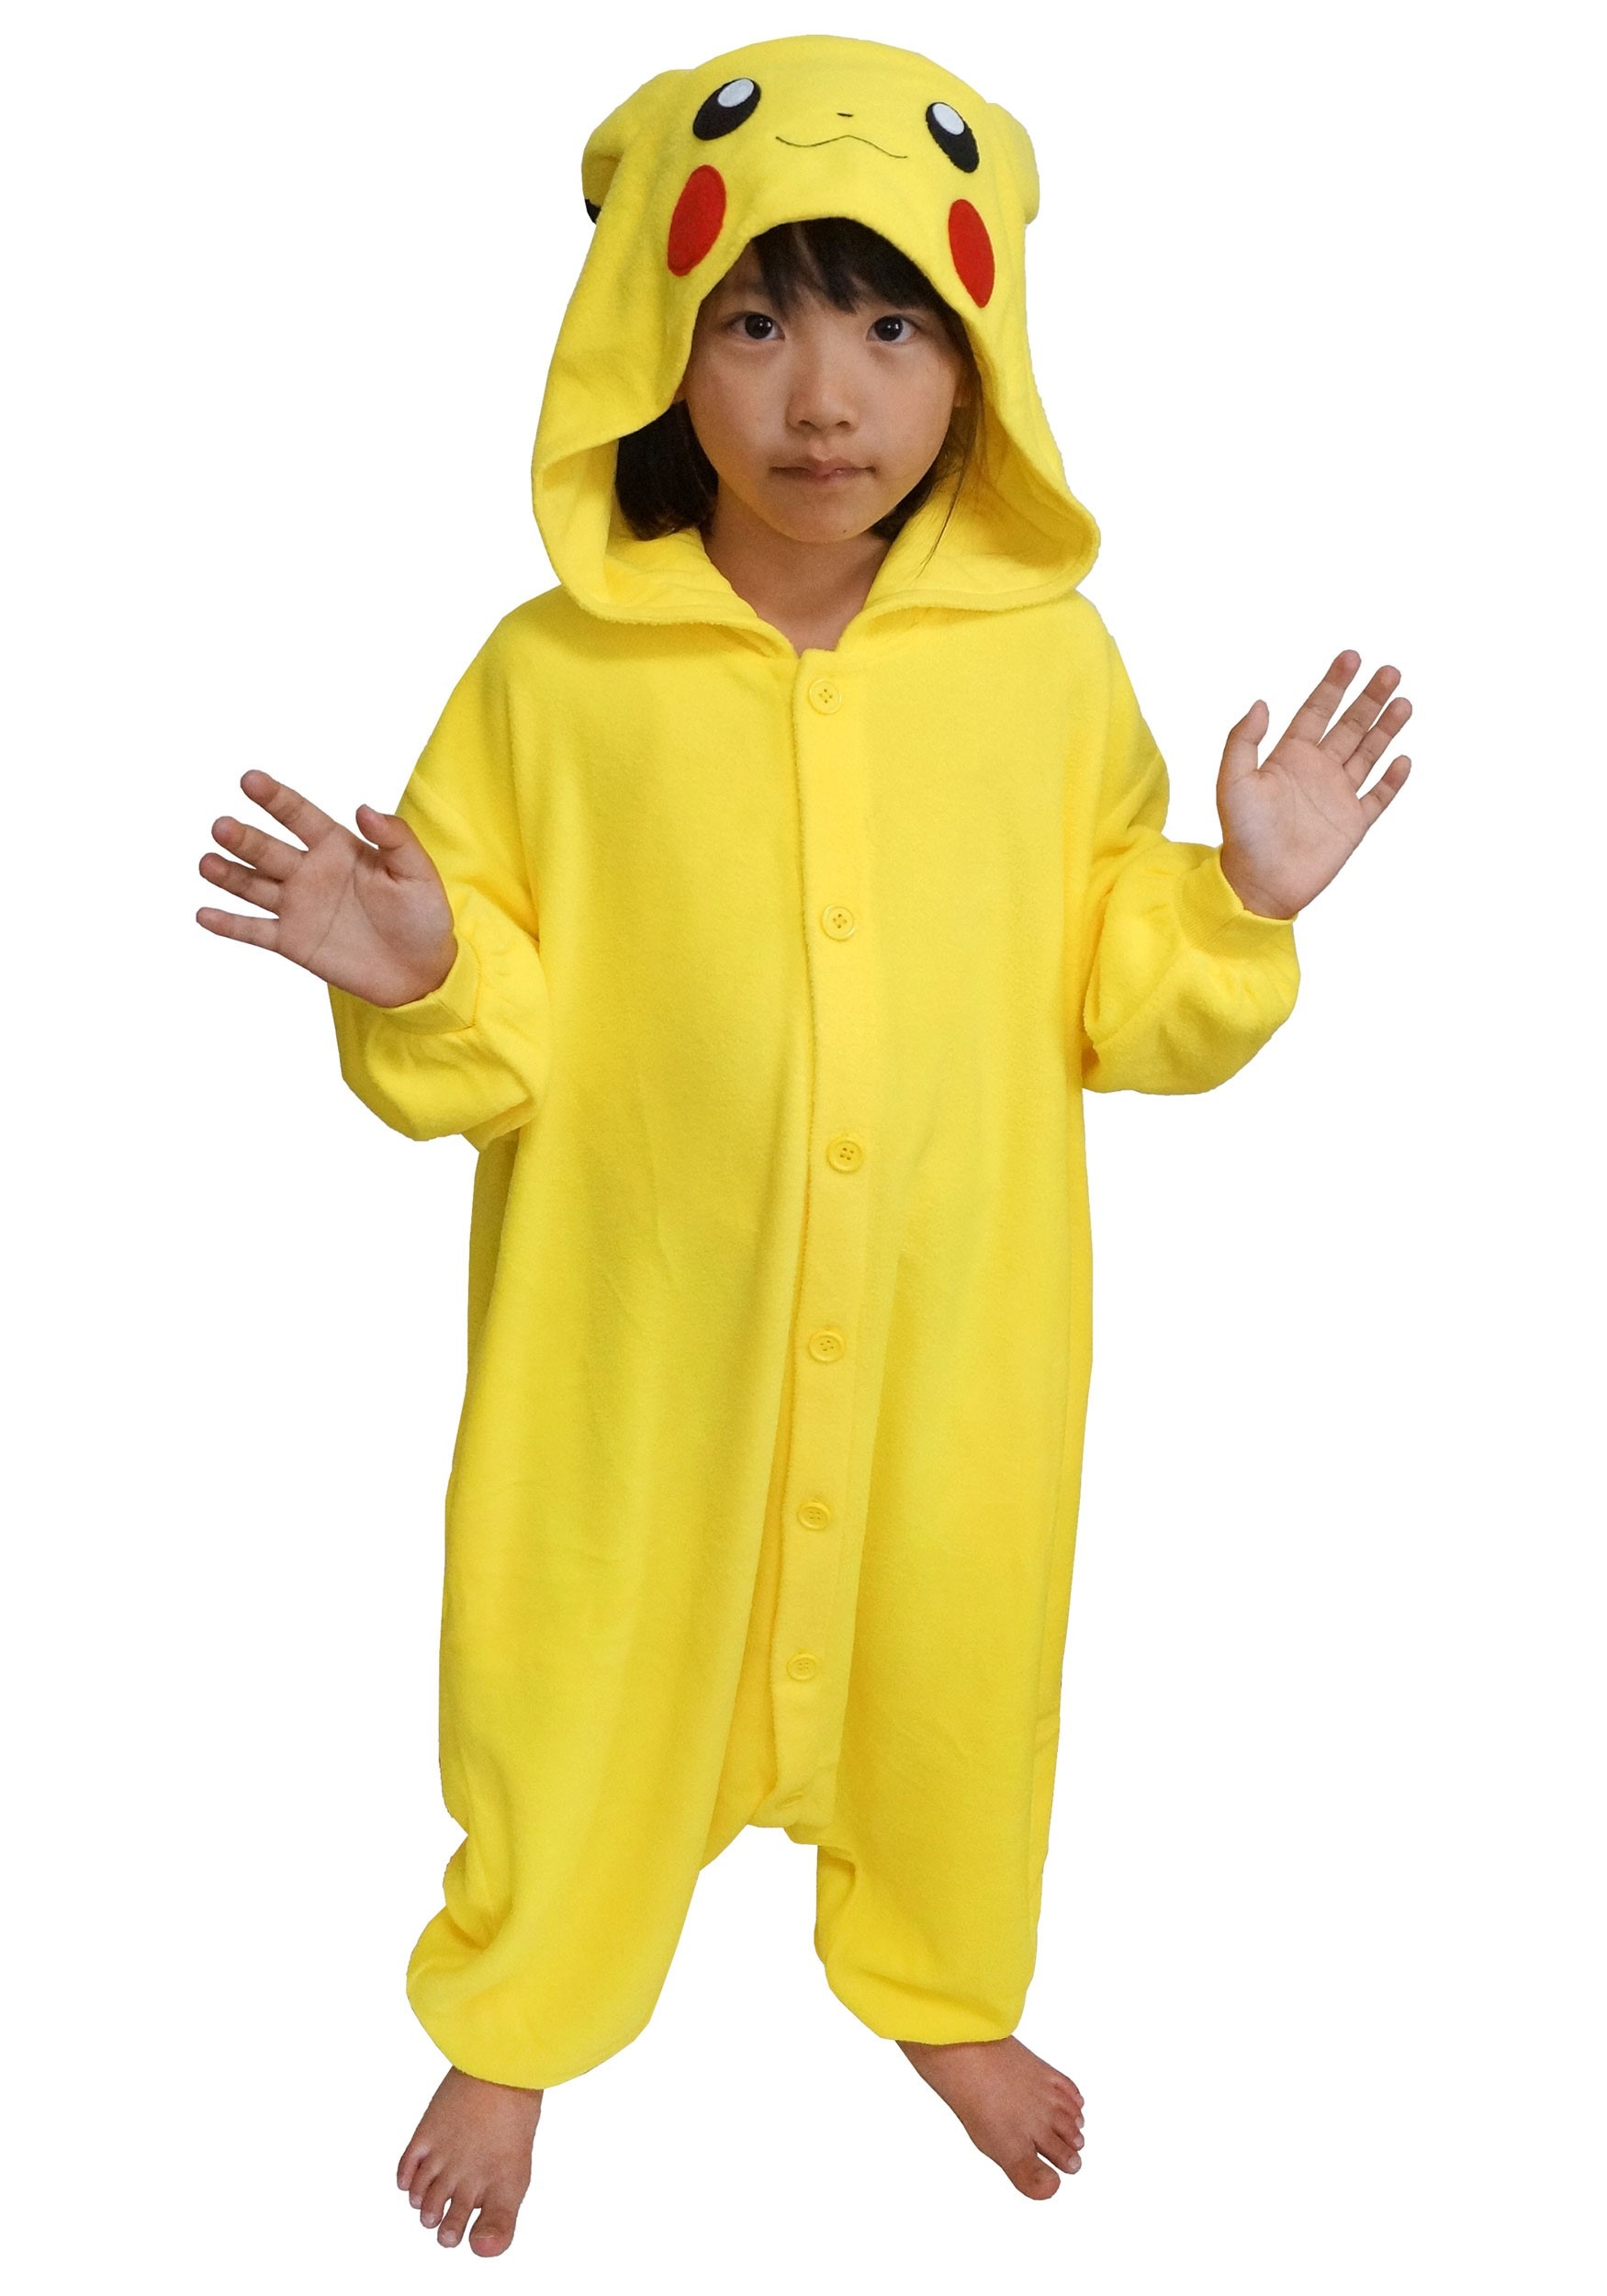 Pokemon Pikachu All in One Pyjamas Super Soft Hooded for Boys Girls Teens